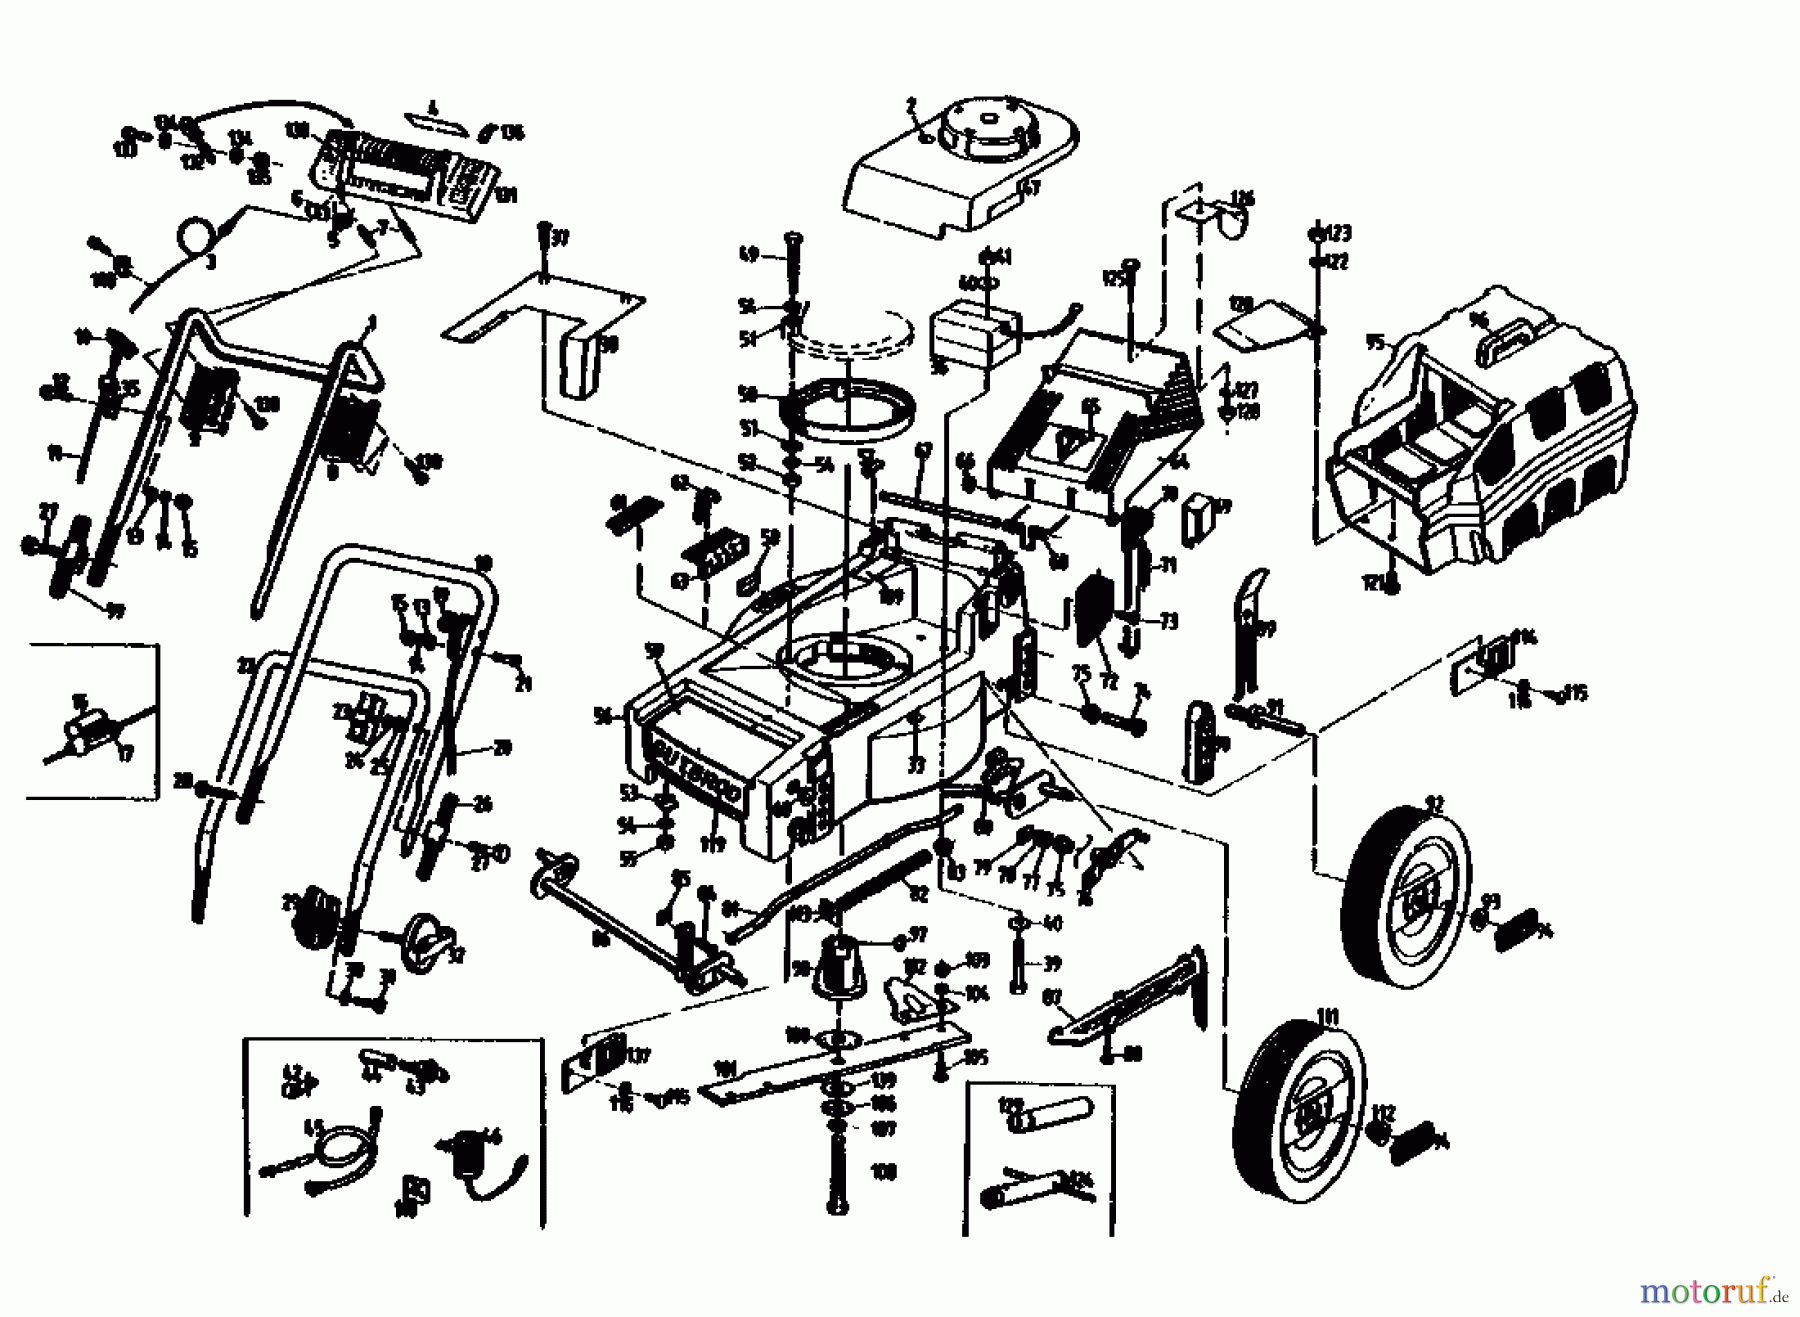  Gutbrod Petrol mower HB 40 02896.01  (1990) Basic machine